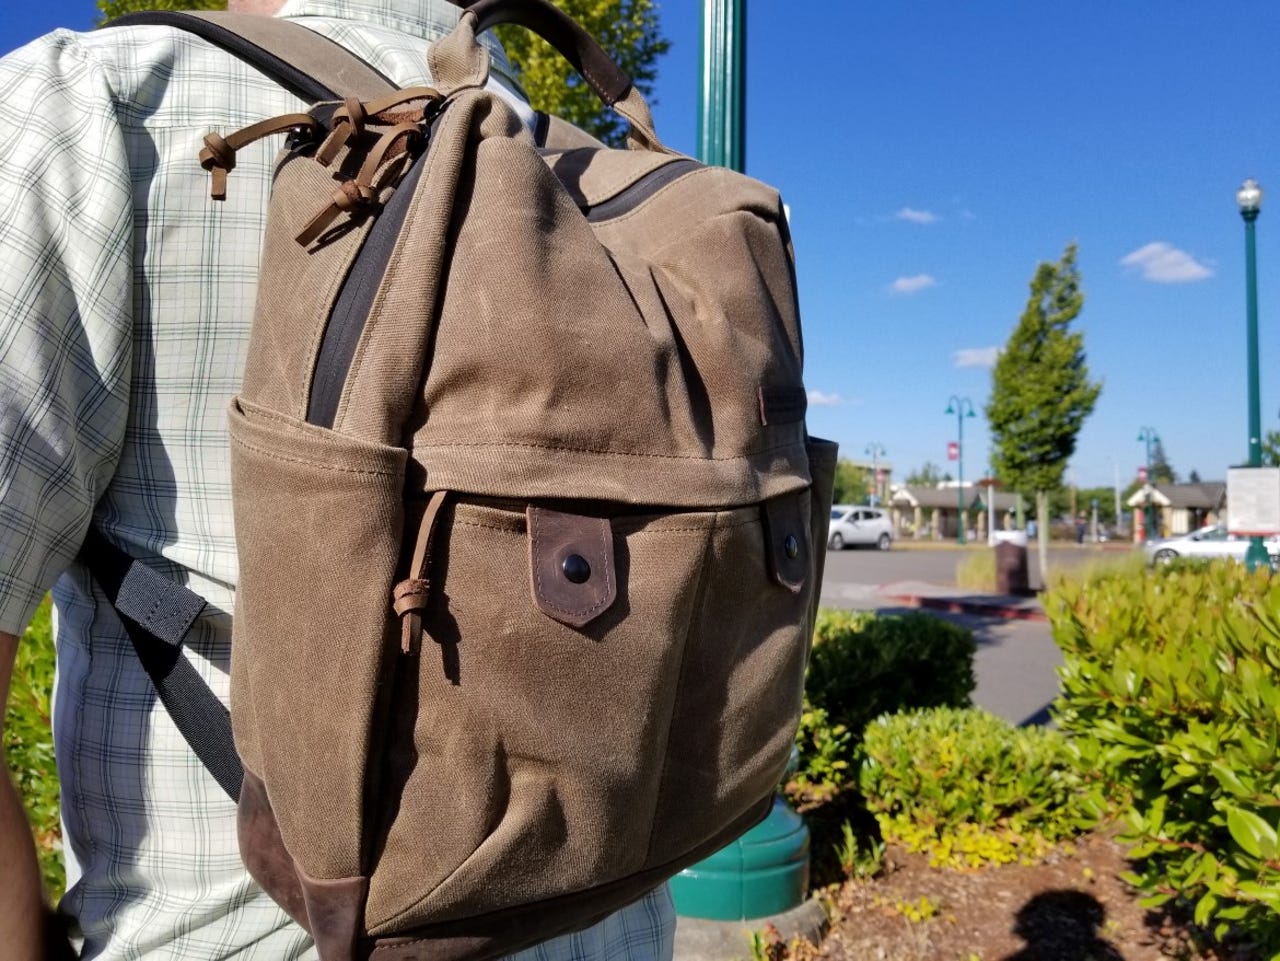 Backpack Designs